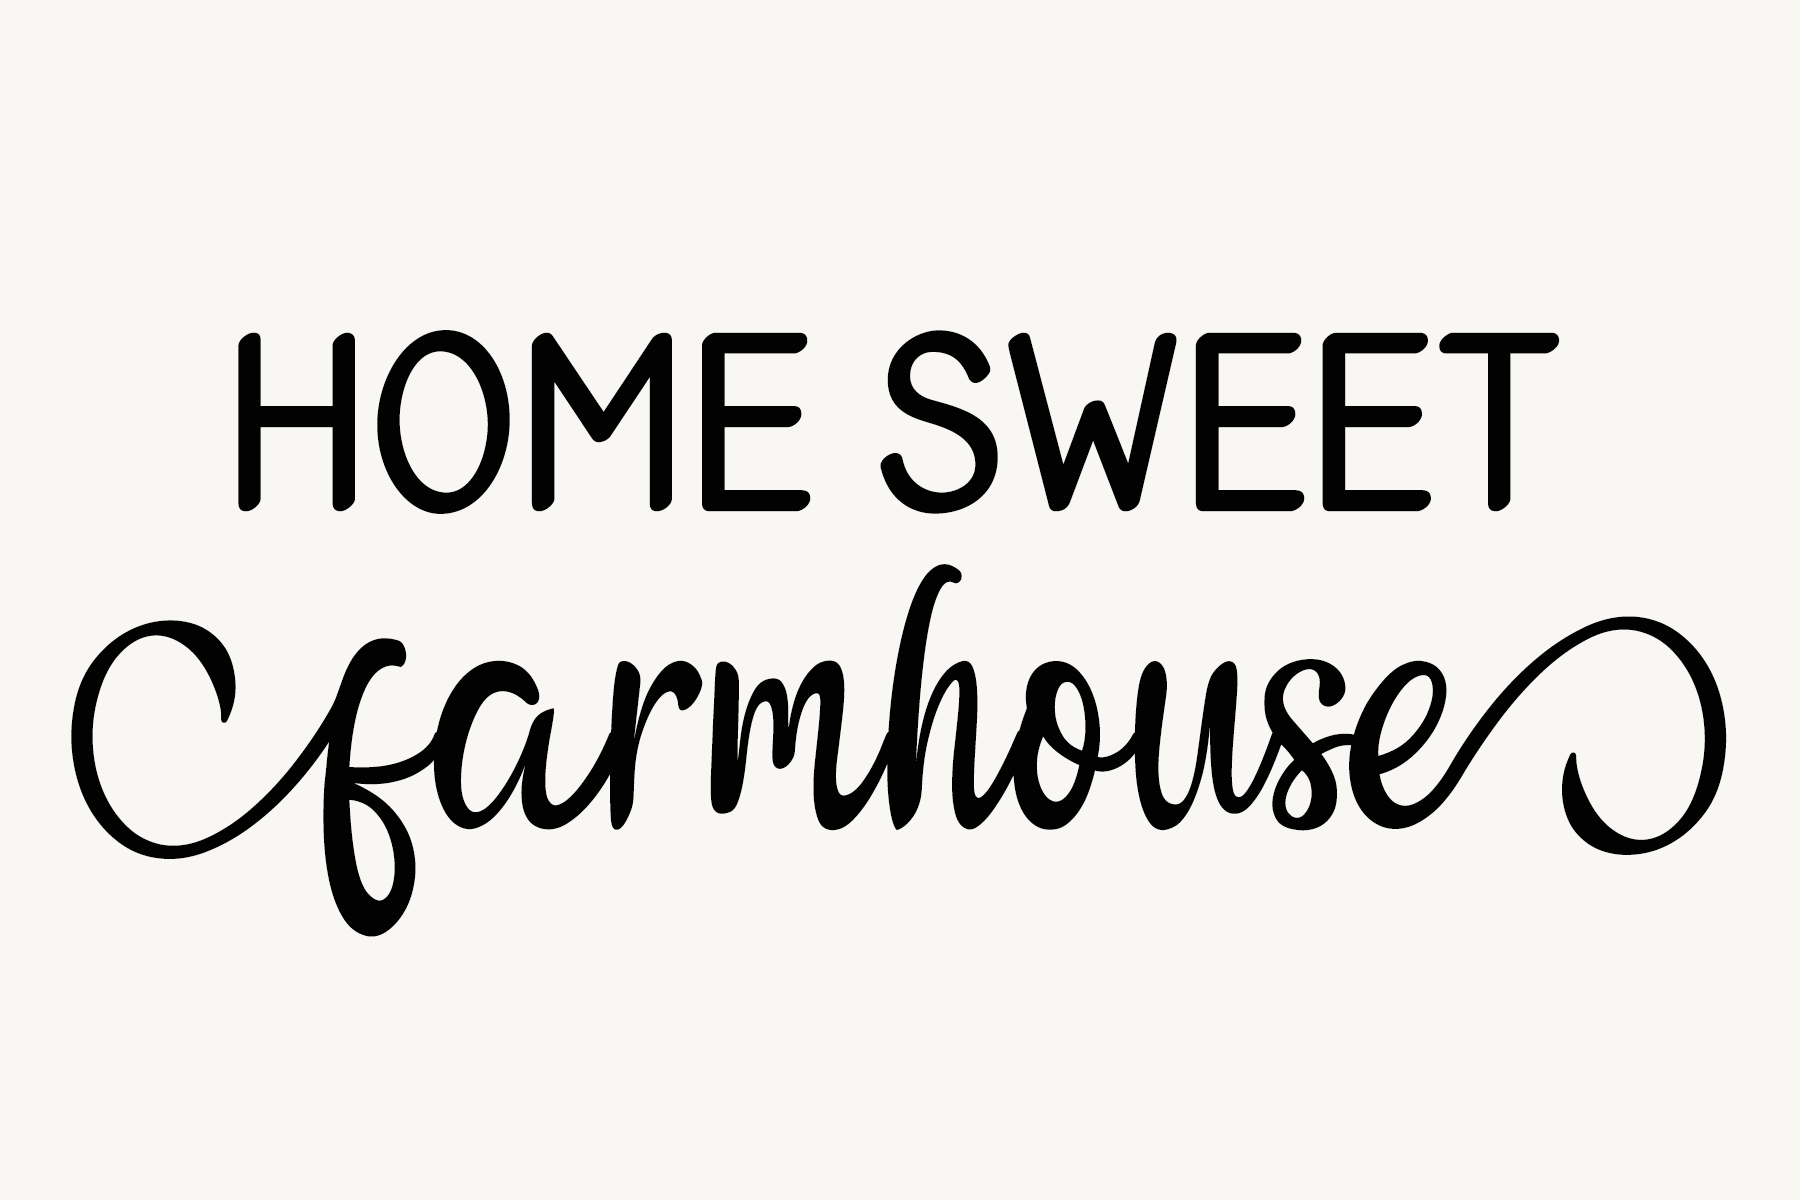 Download Home Sweet FarmHouse by Bean & Bird | Design Bundles